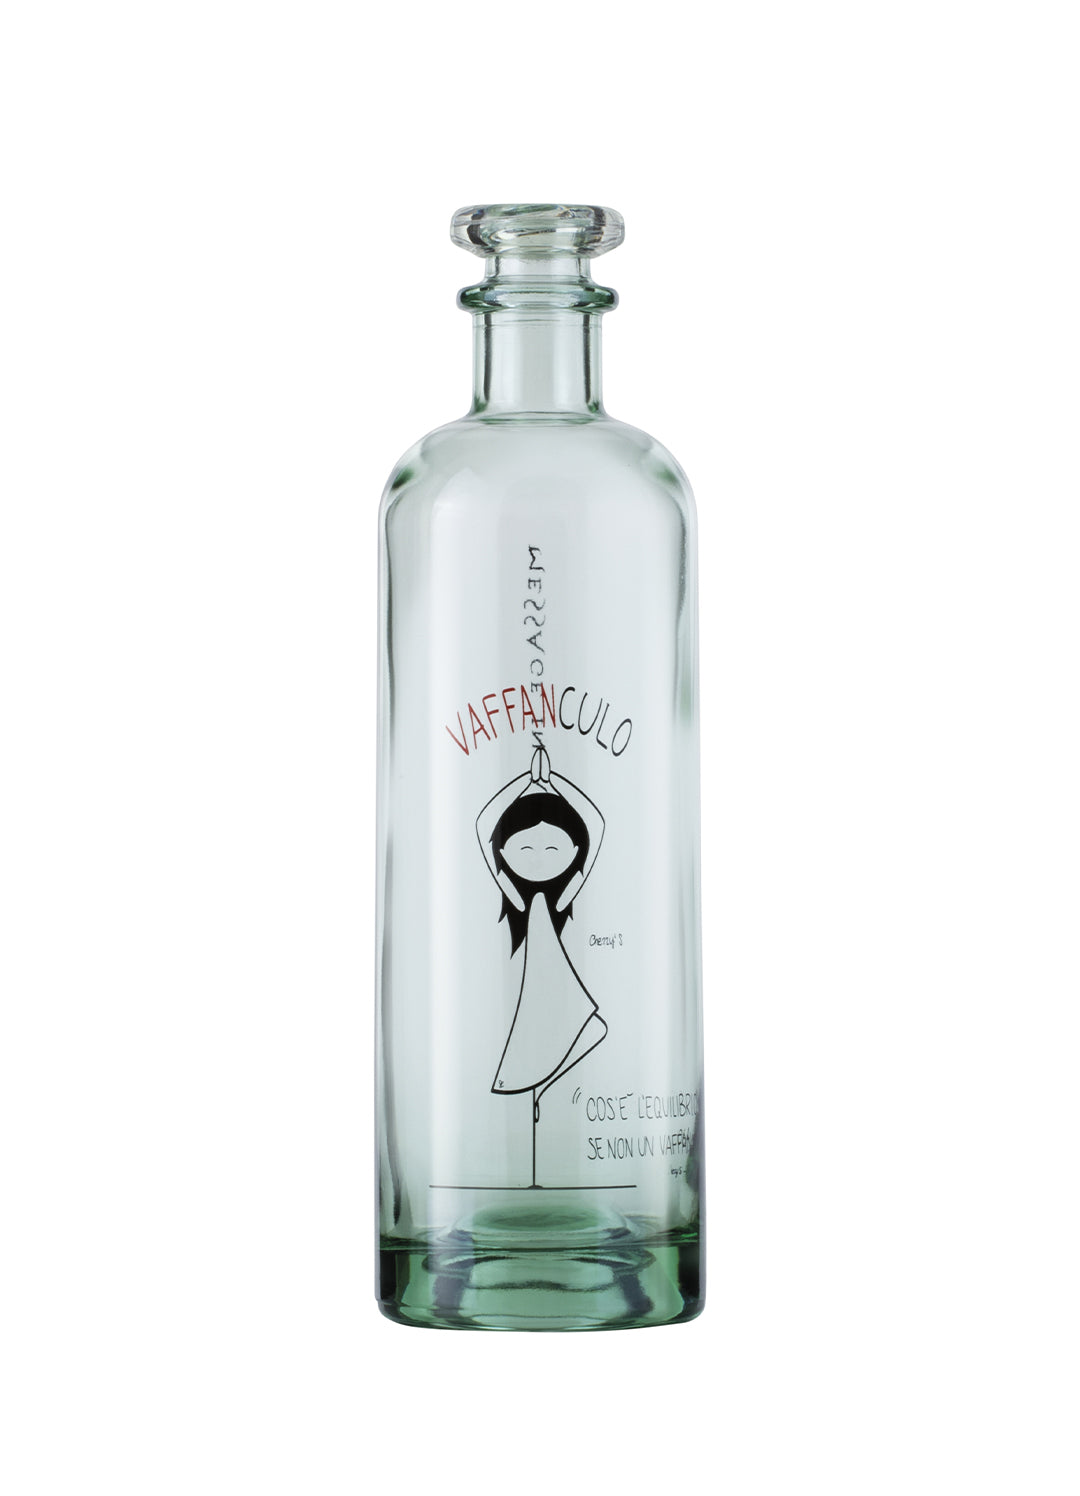 Bottiglia - Wild Message in a bottle - Vaffanyoga 700 ml - 2